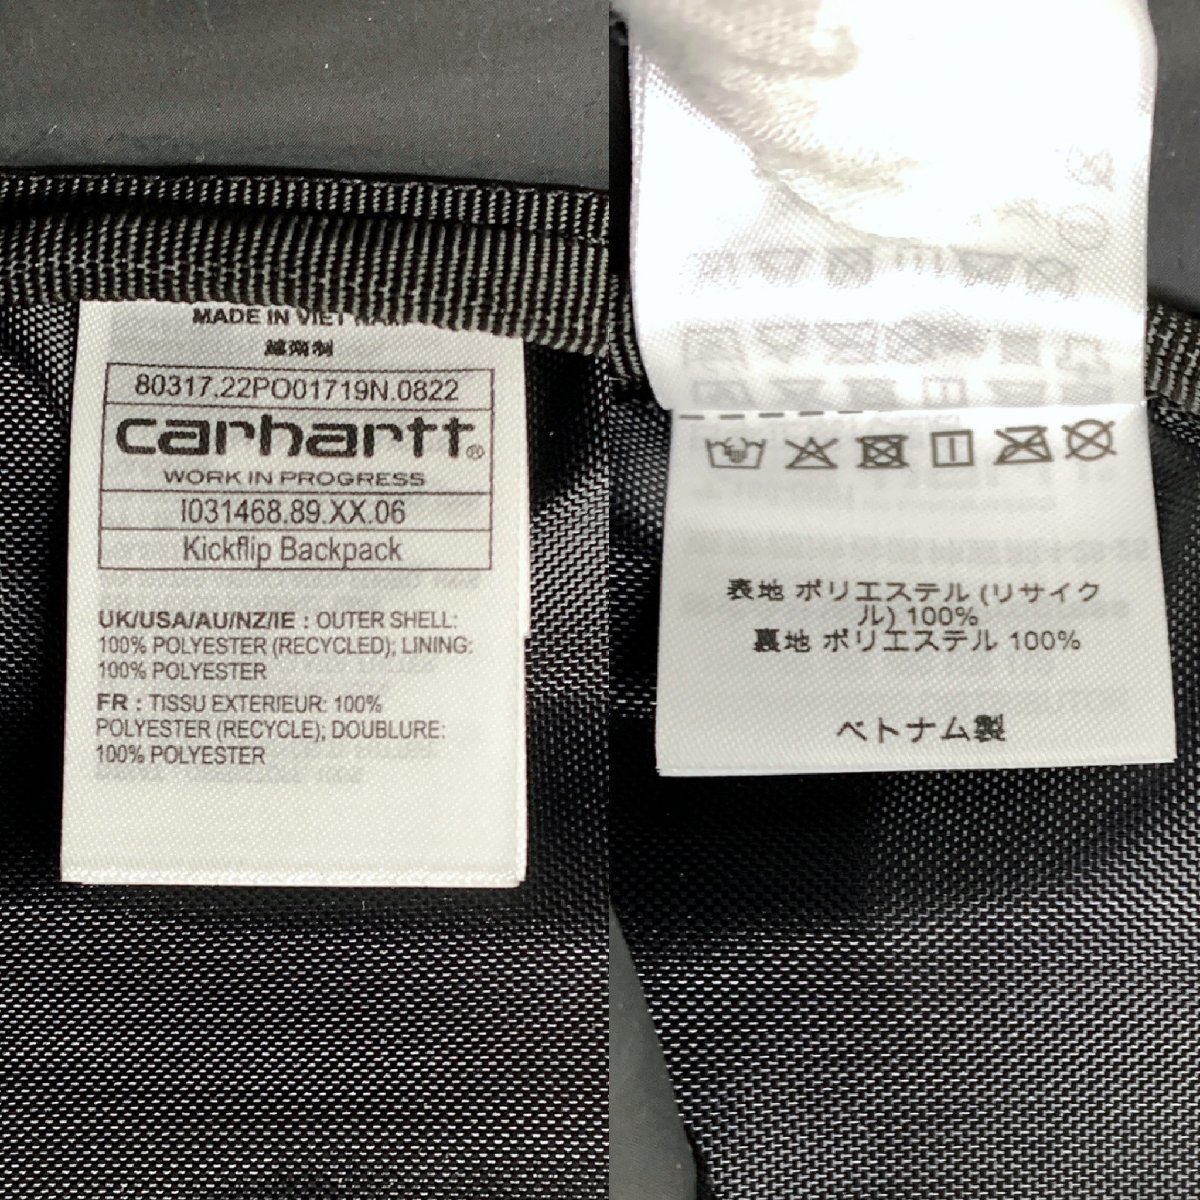 Carhartt WIP (カーハートWIP) Kickflip Backpack リュック バックパック デイパック 黒 ブラック I031468 089 ウィメンズ/025_画像10